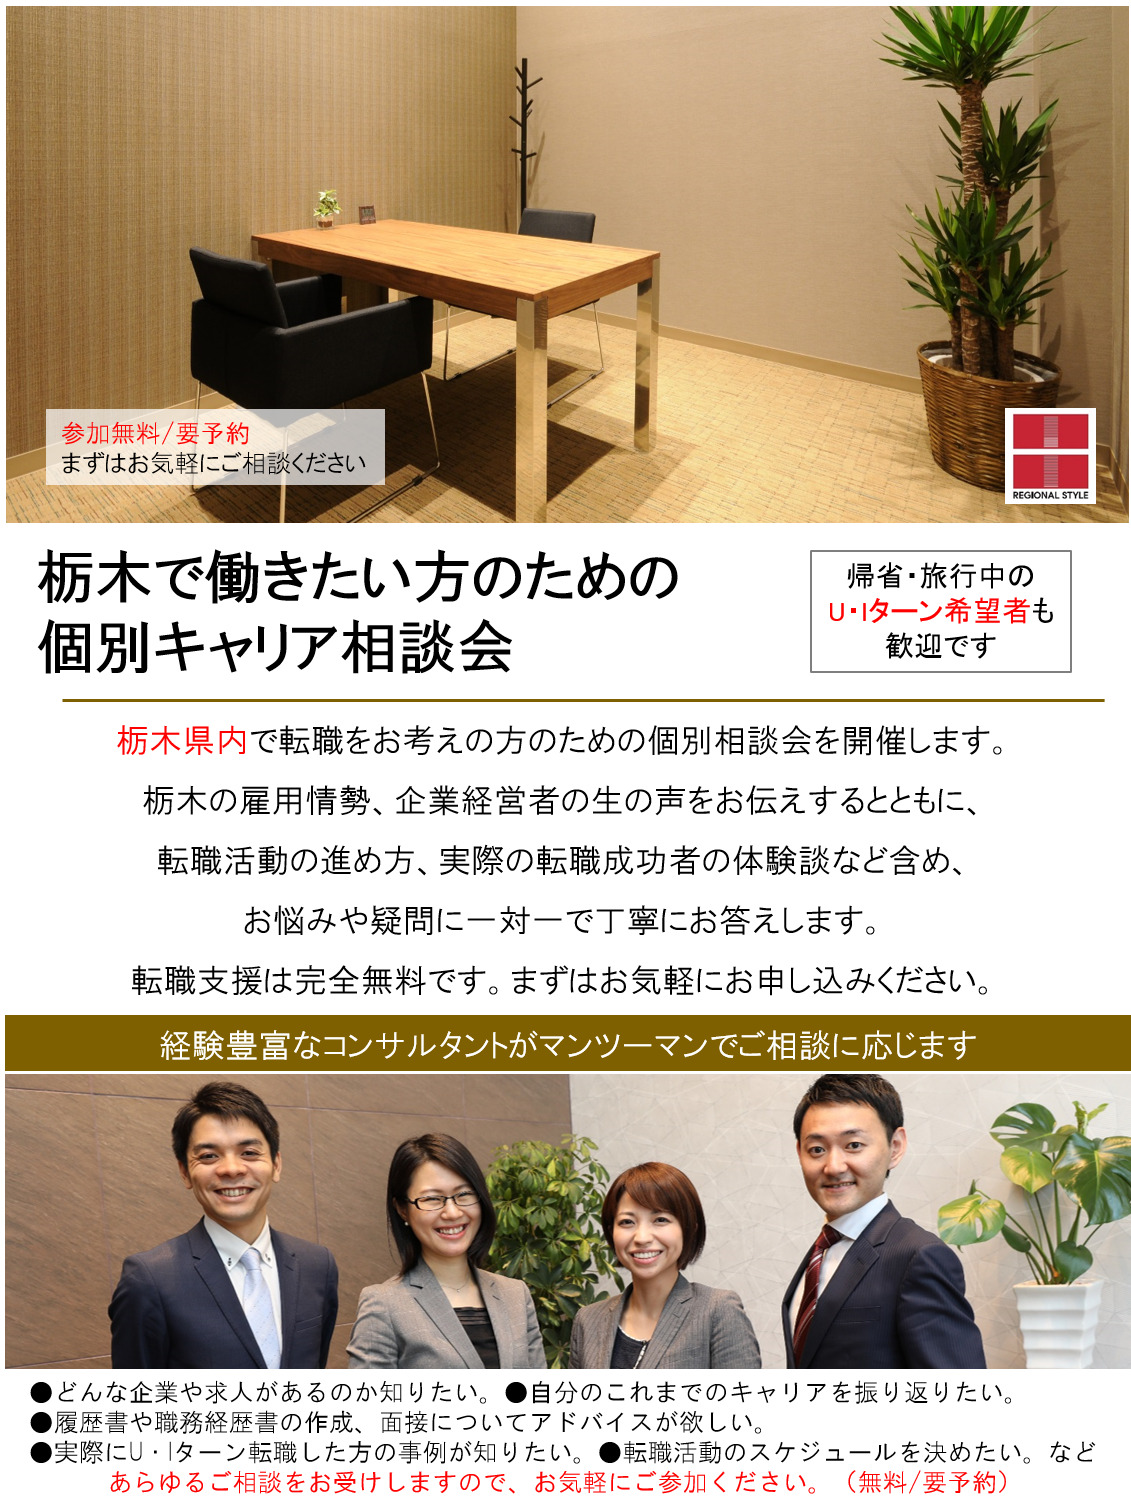 http://www.regional.co.jp/career_mt/2018gwtochigi.png